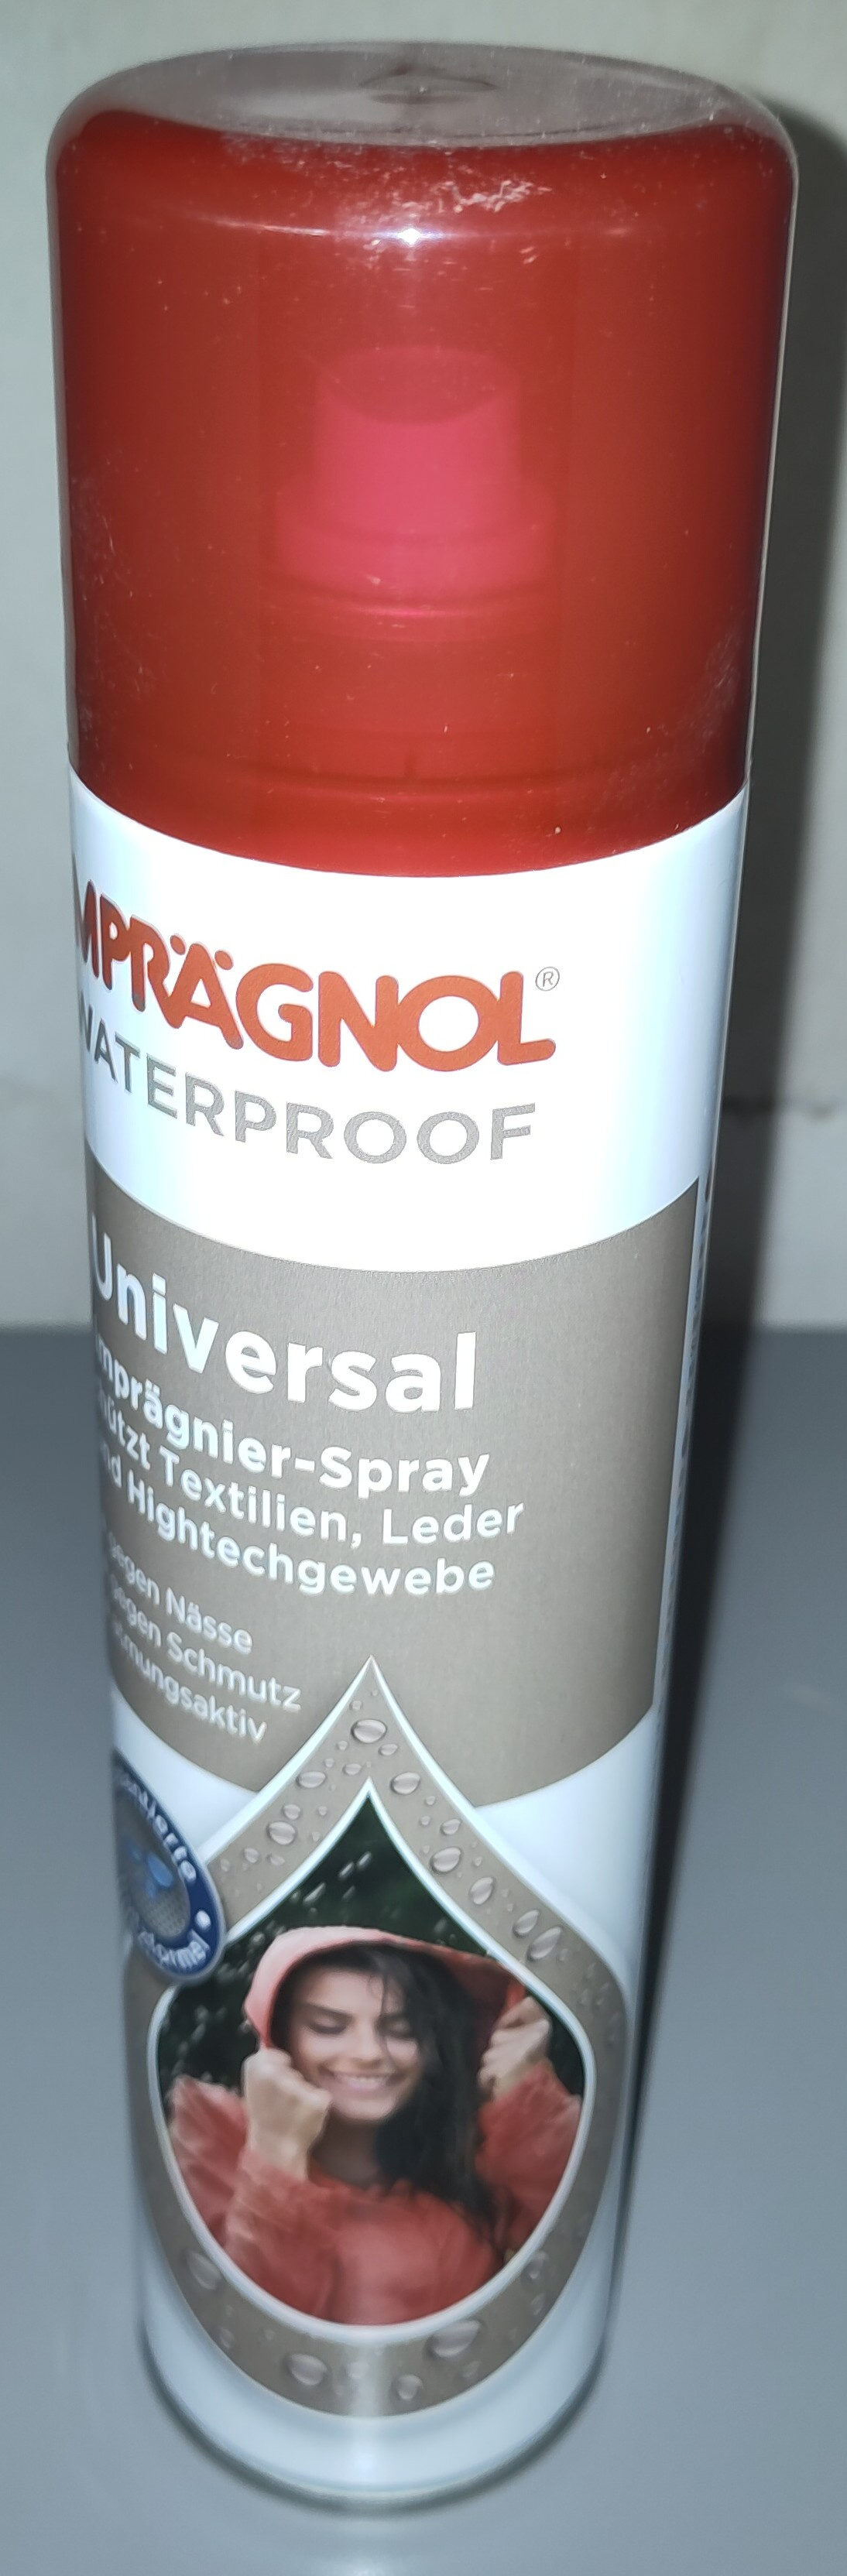 Imprägnol Waterproof Universal Imprägnierspray - Produit - de